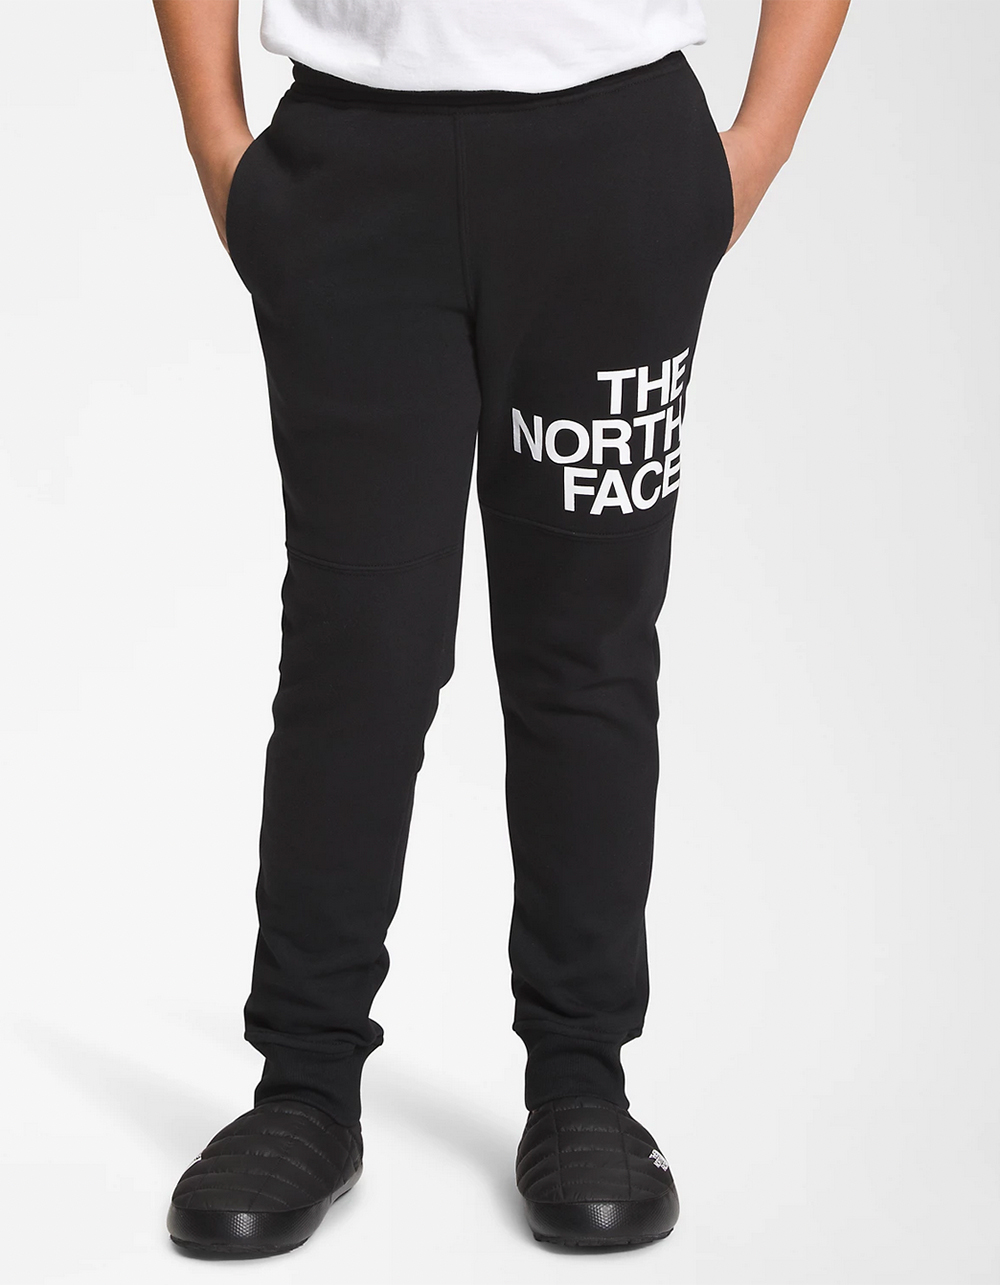 THE NORTH FACE Boys Fleece Pants - BLACK